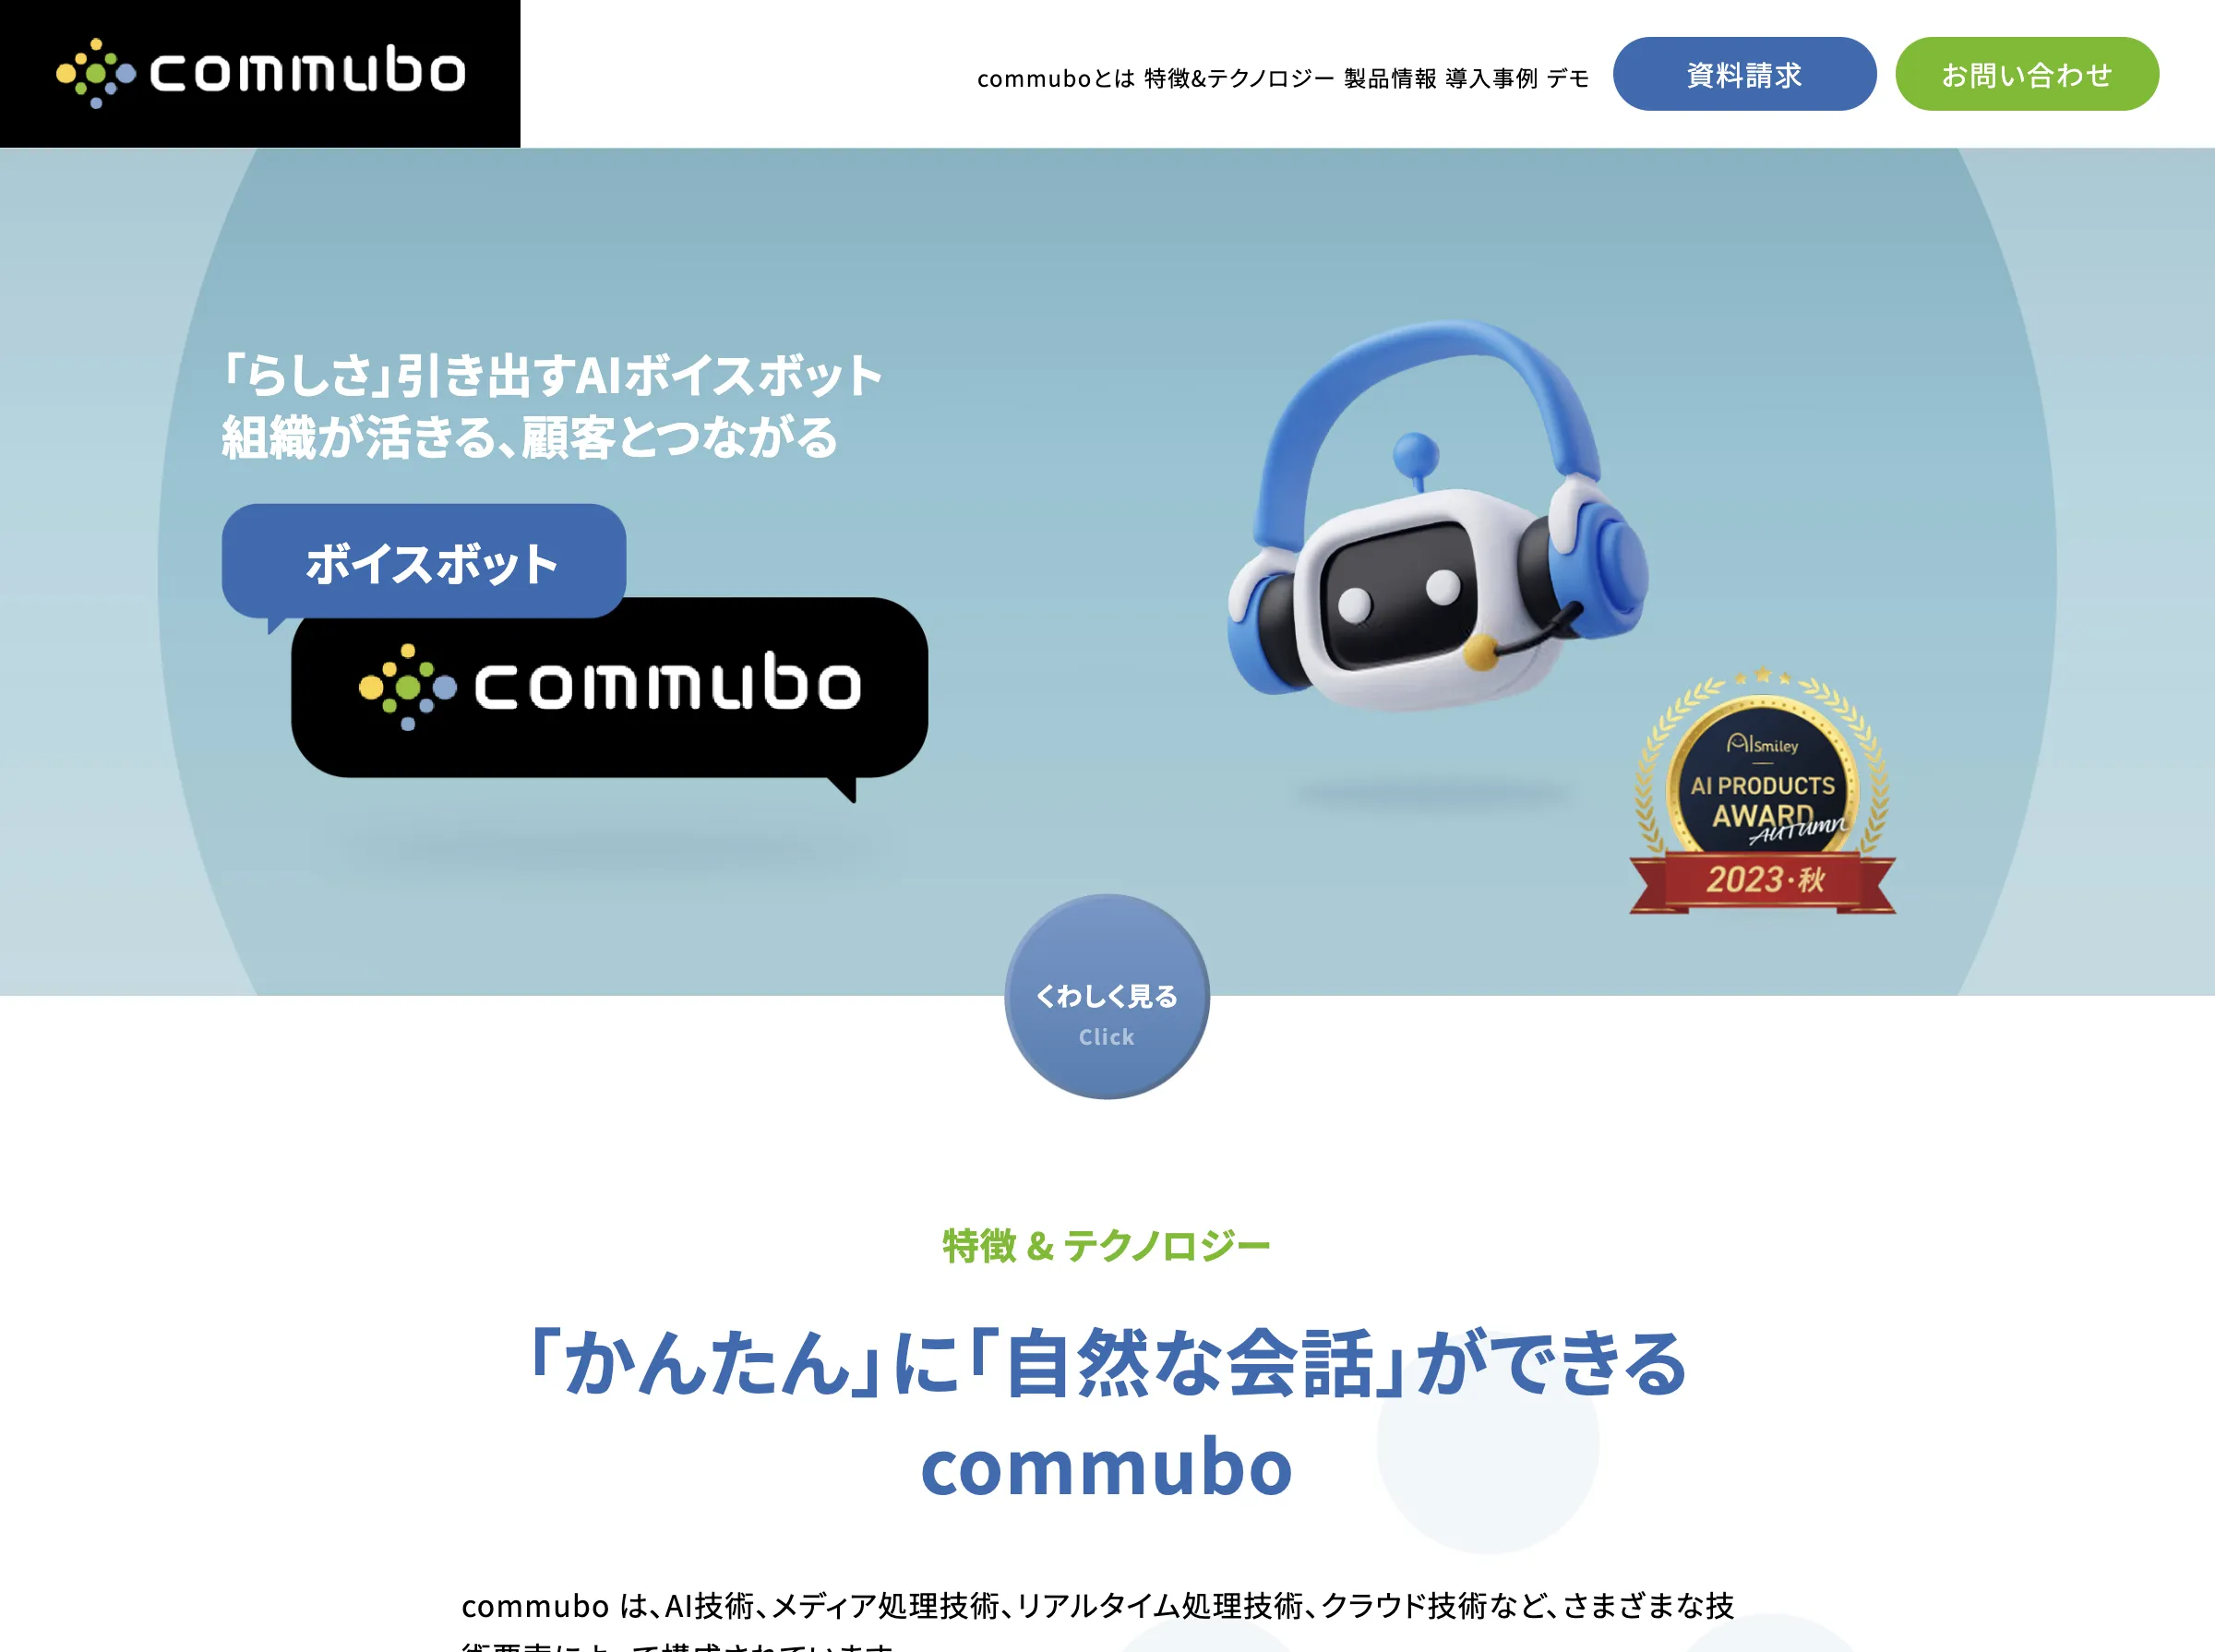 commubo(株式会社ソフトフロントホールディングス)